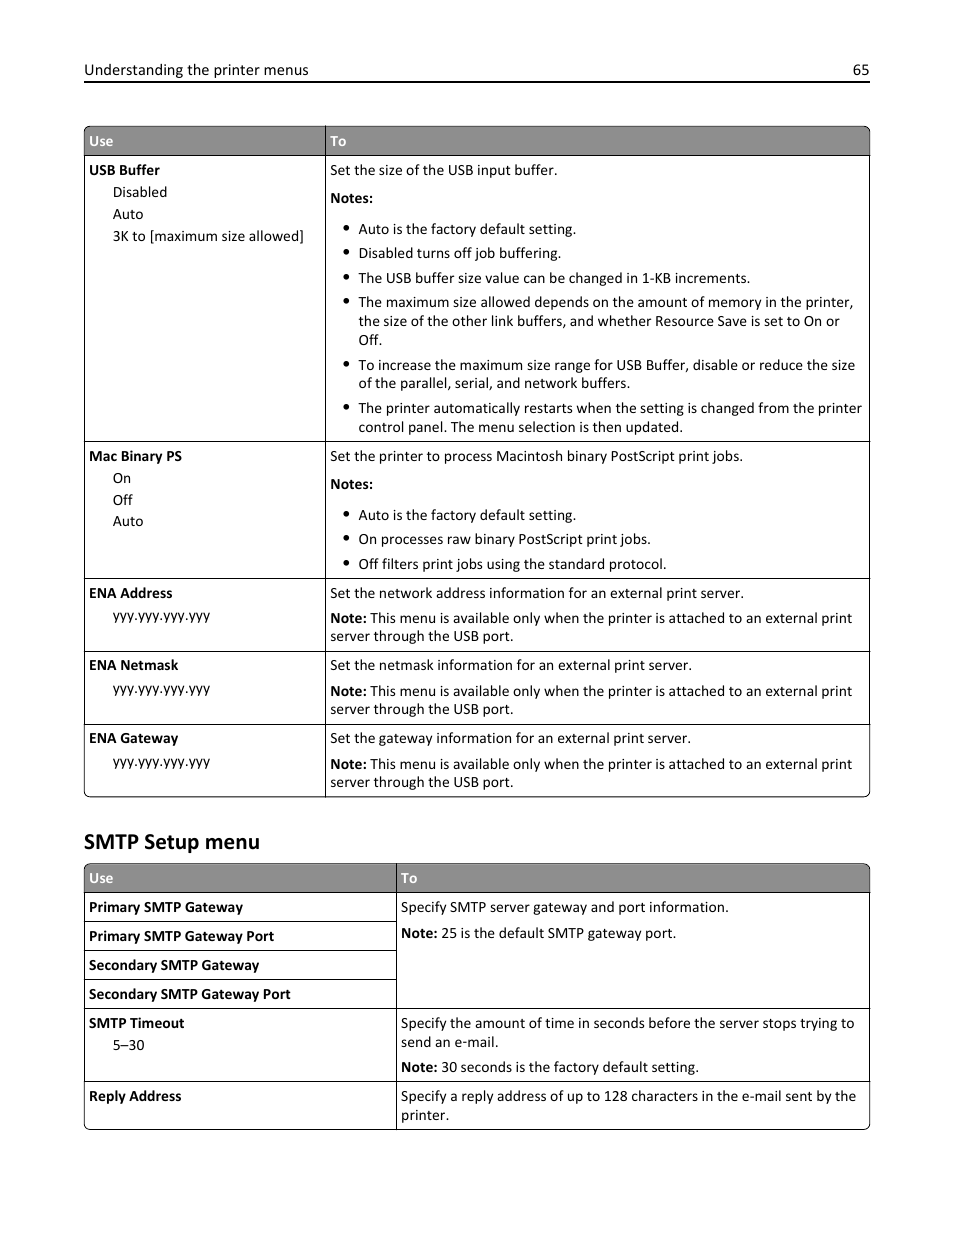 Smtp setup menu | Dell B2360dn Mono Laser Printer User Manual | Page 65